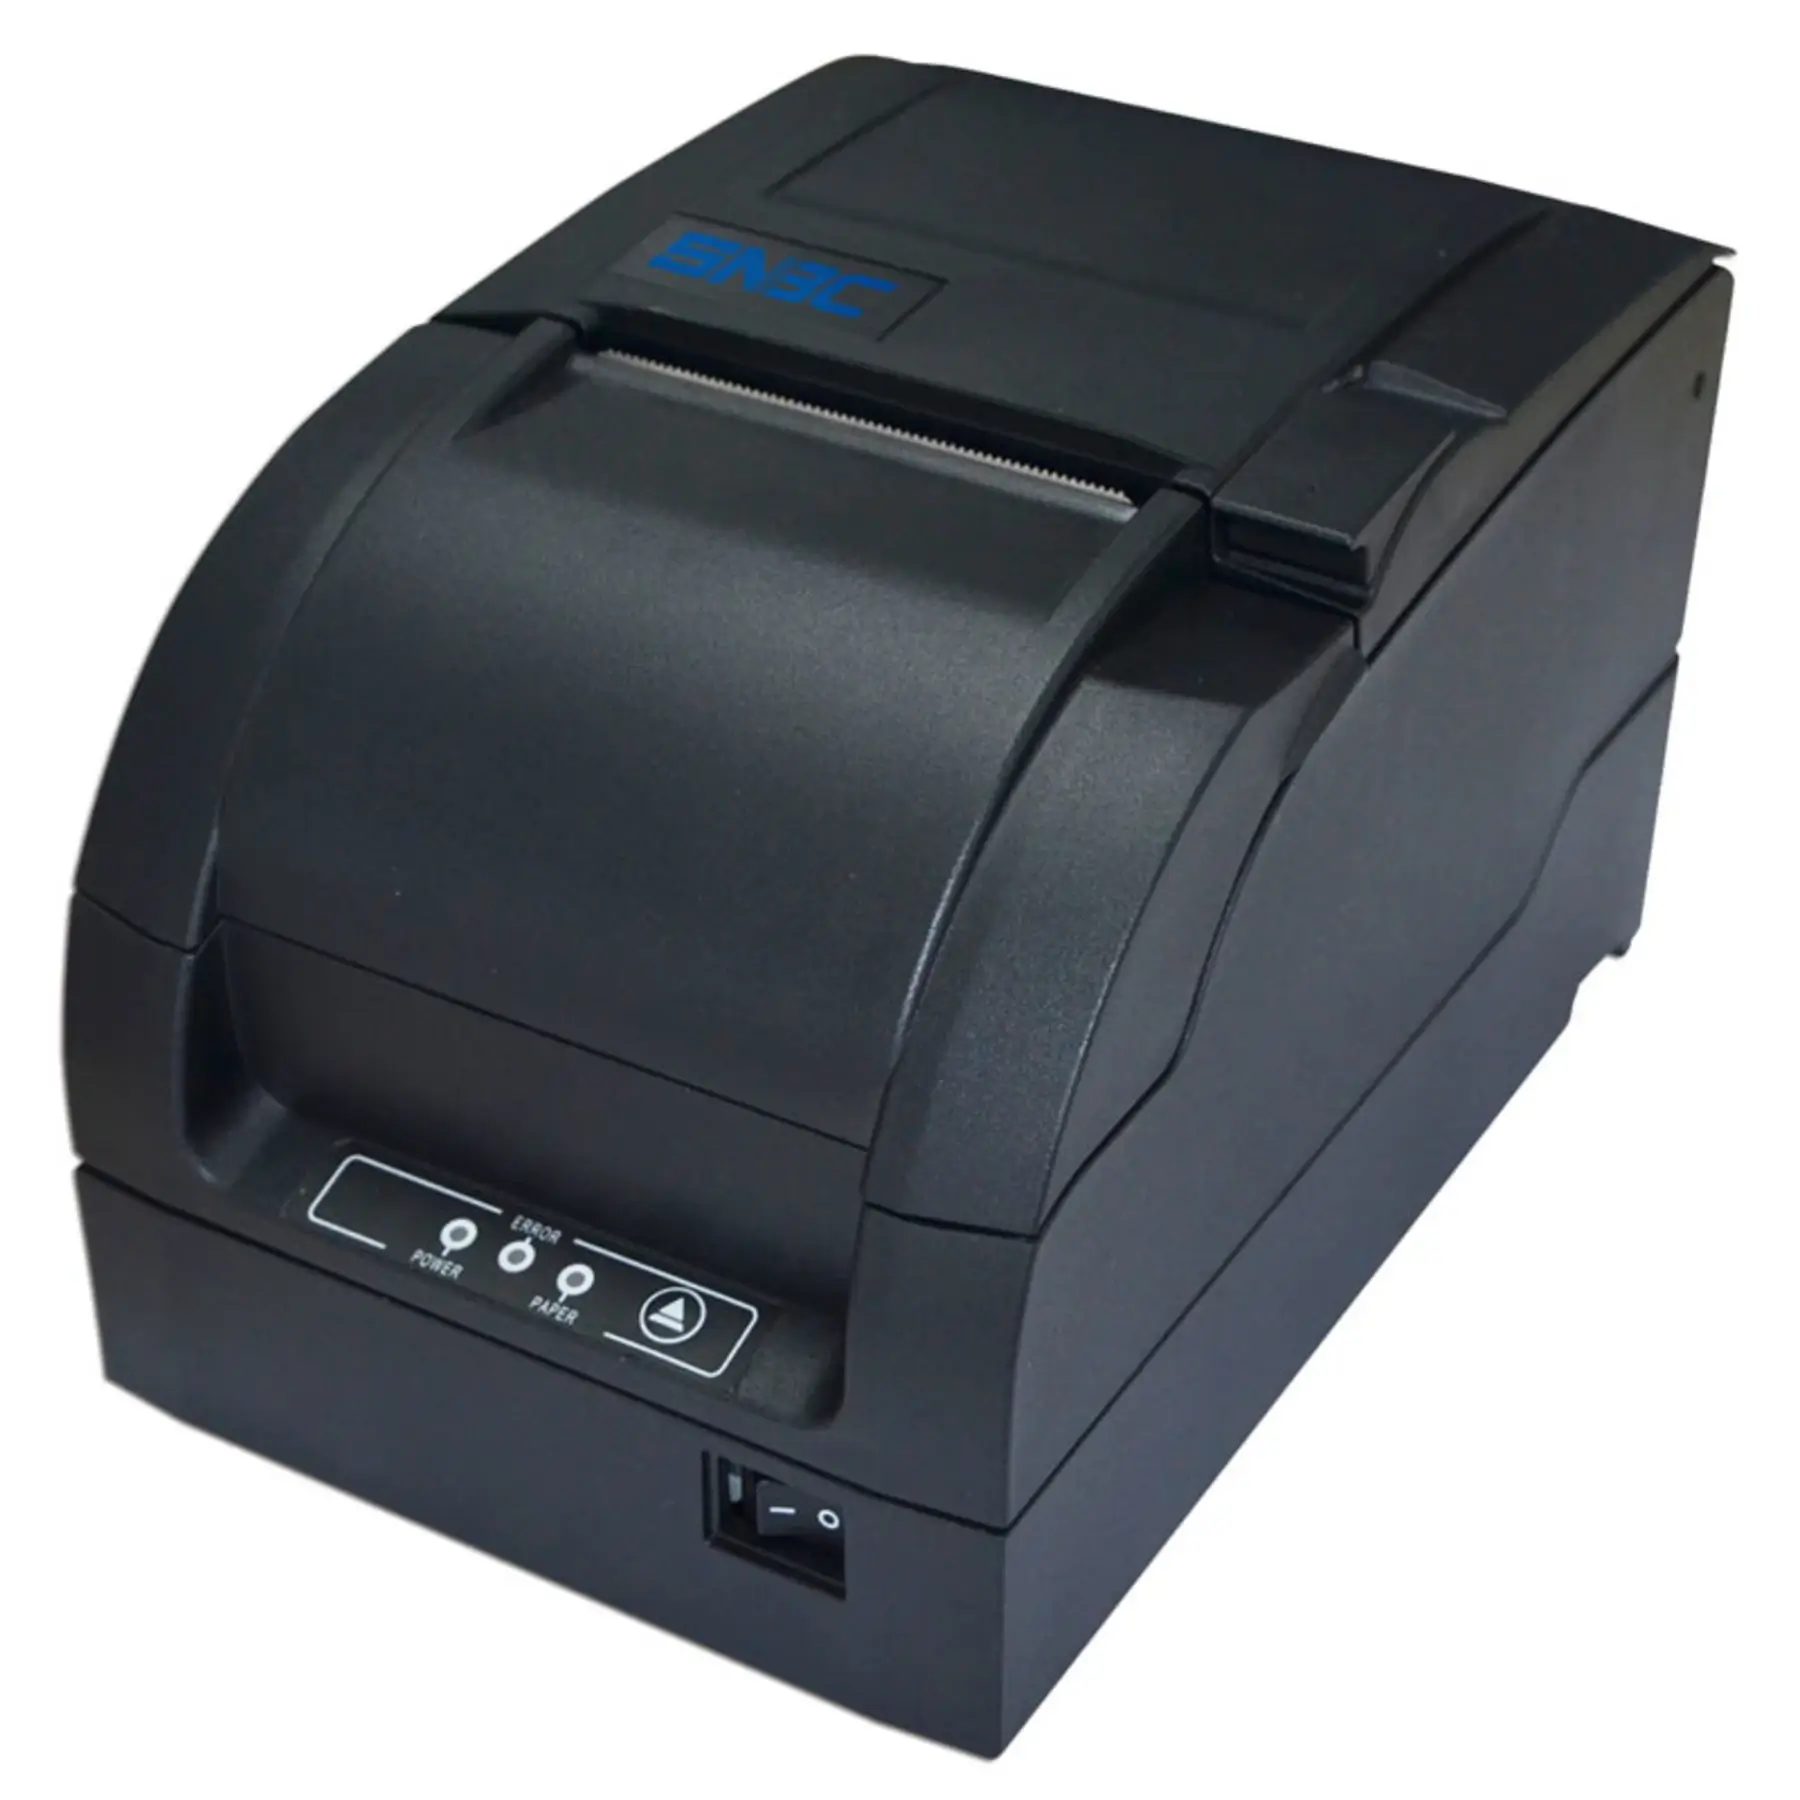 SNBC BTP M300 Impact Receipt Printer